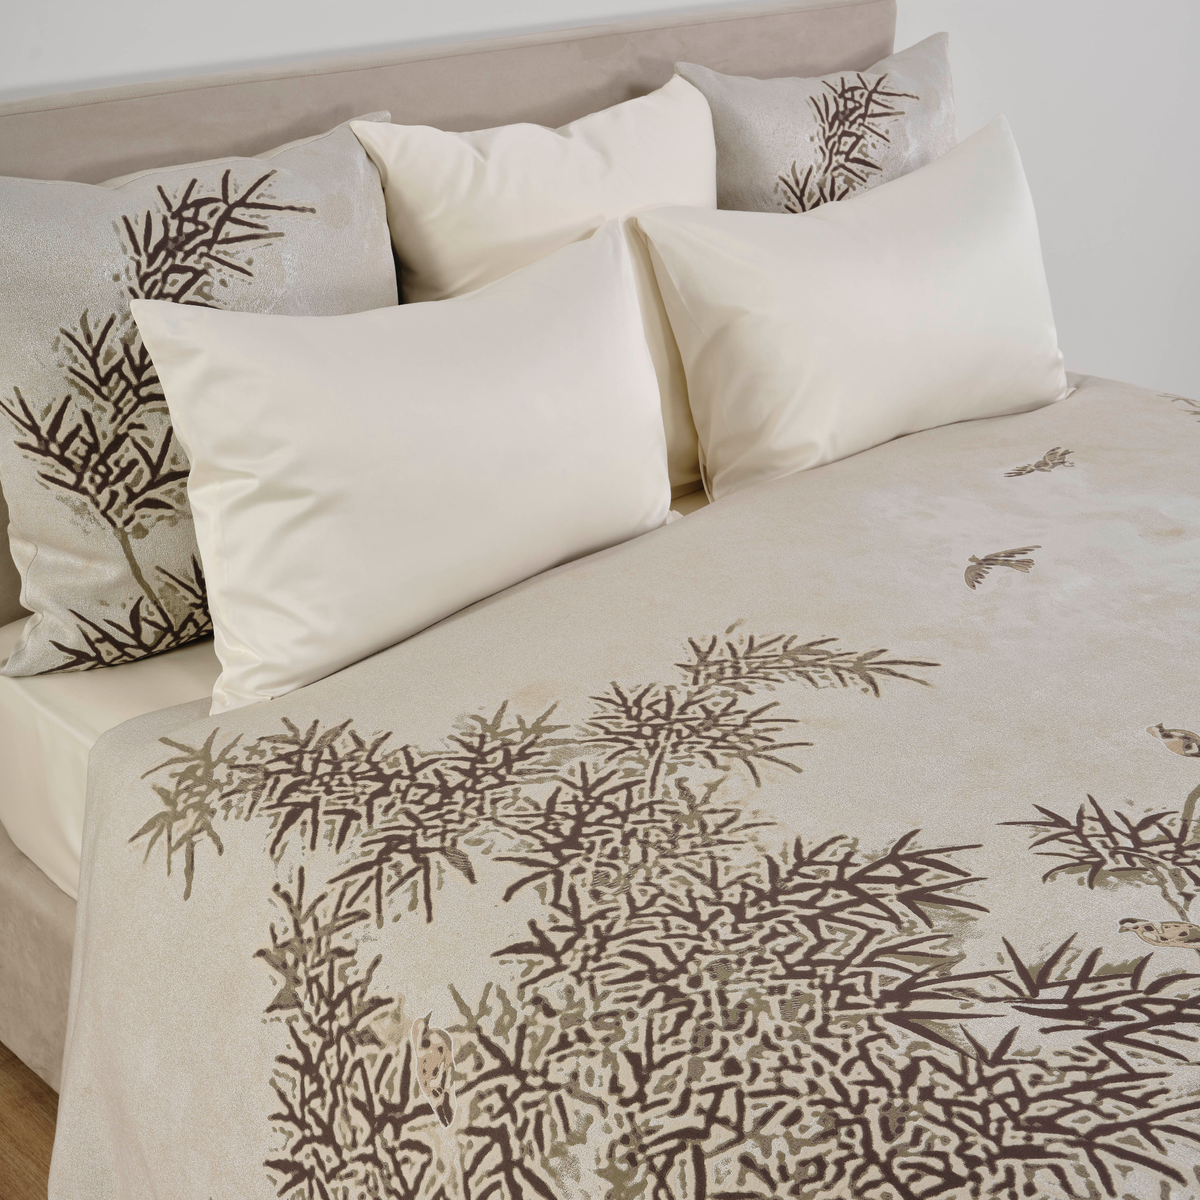 Pillowcases of Celso de Lemos Estampe Collection in Linen Color